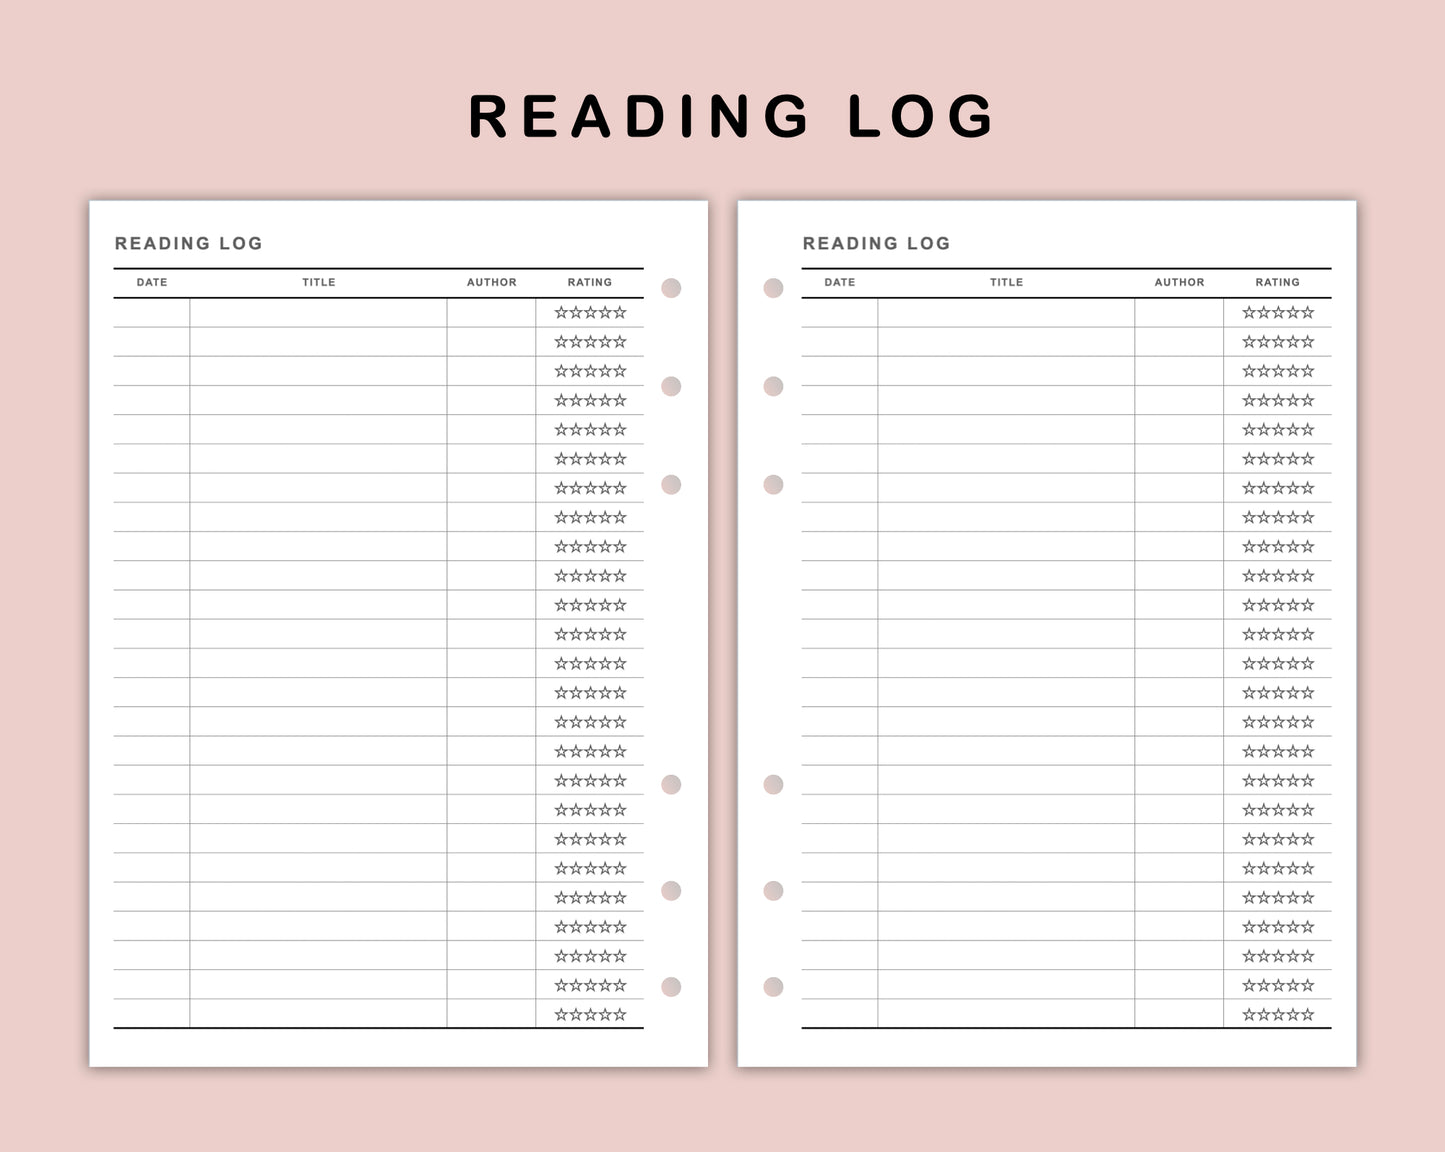 B6 Inserts - Reading Log